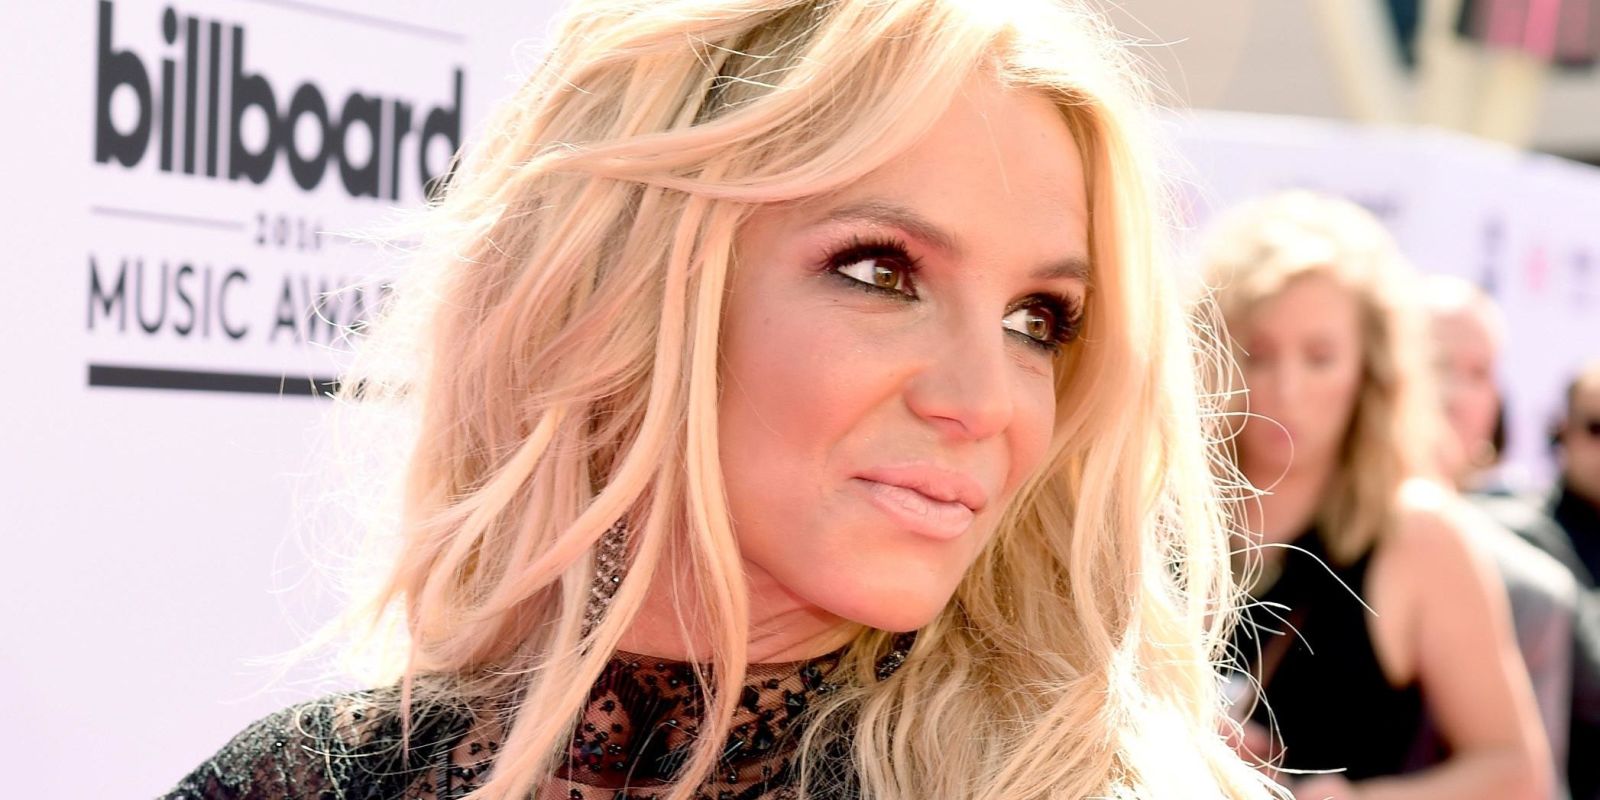 Escucha “Clumsy” otro nuevo tema de Britney Spears